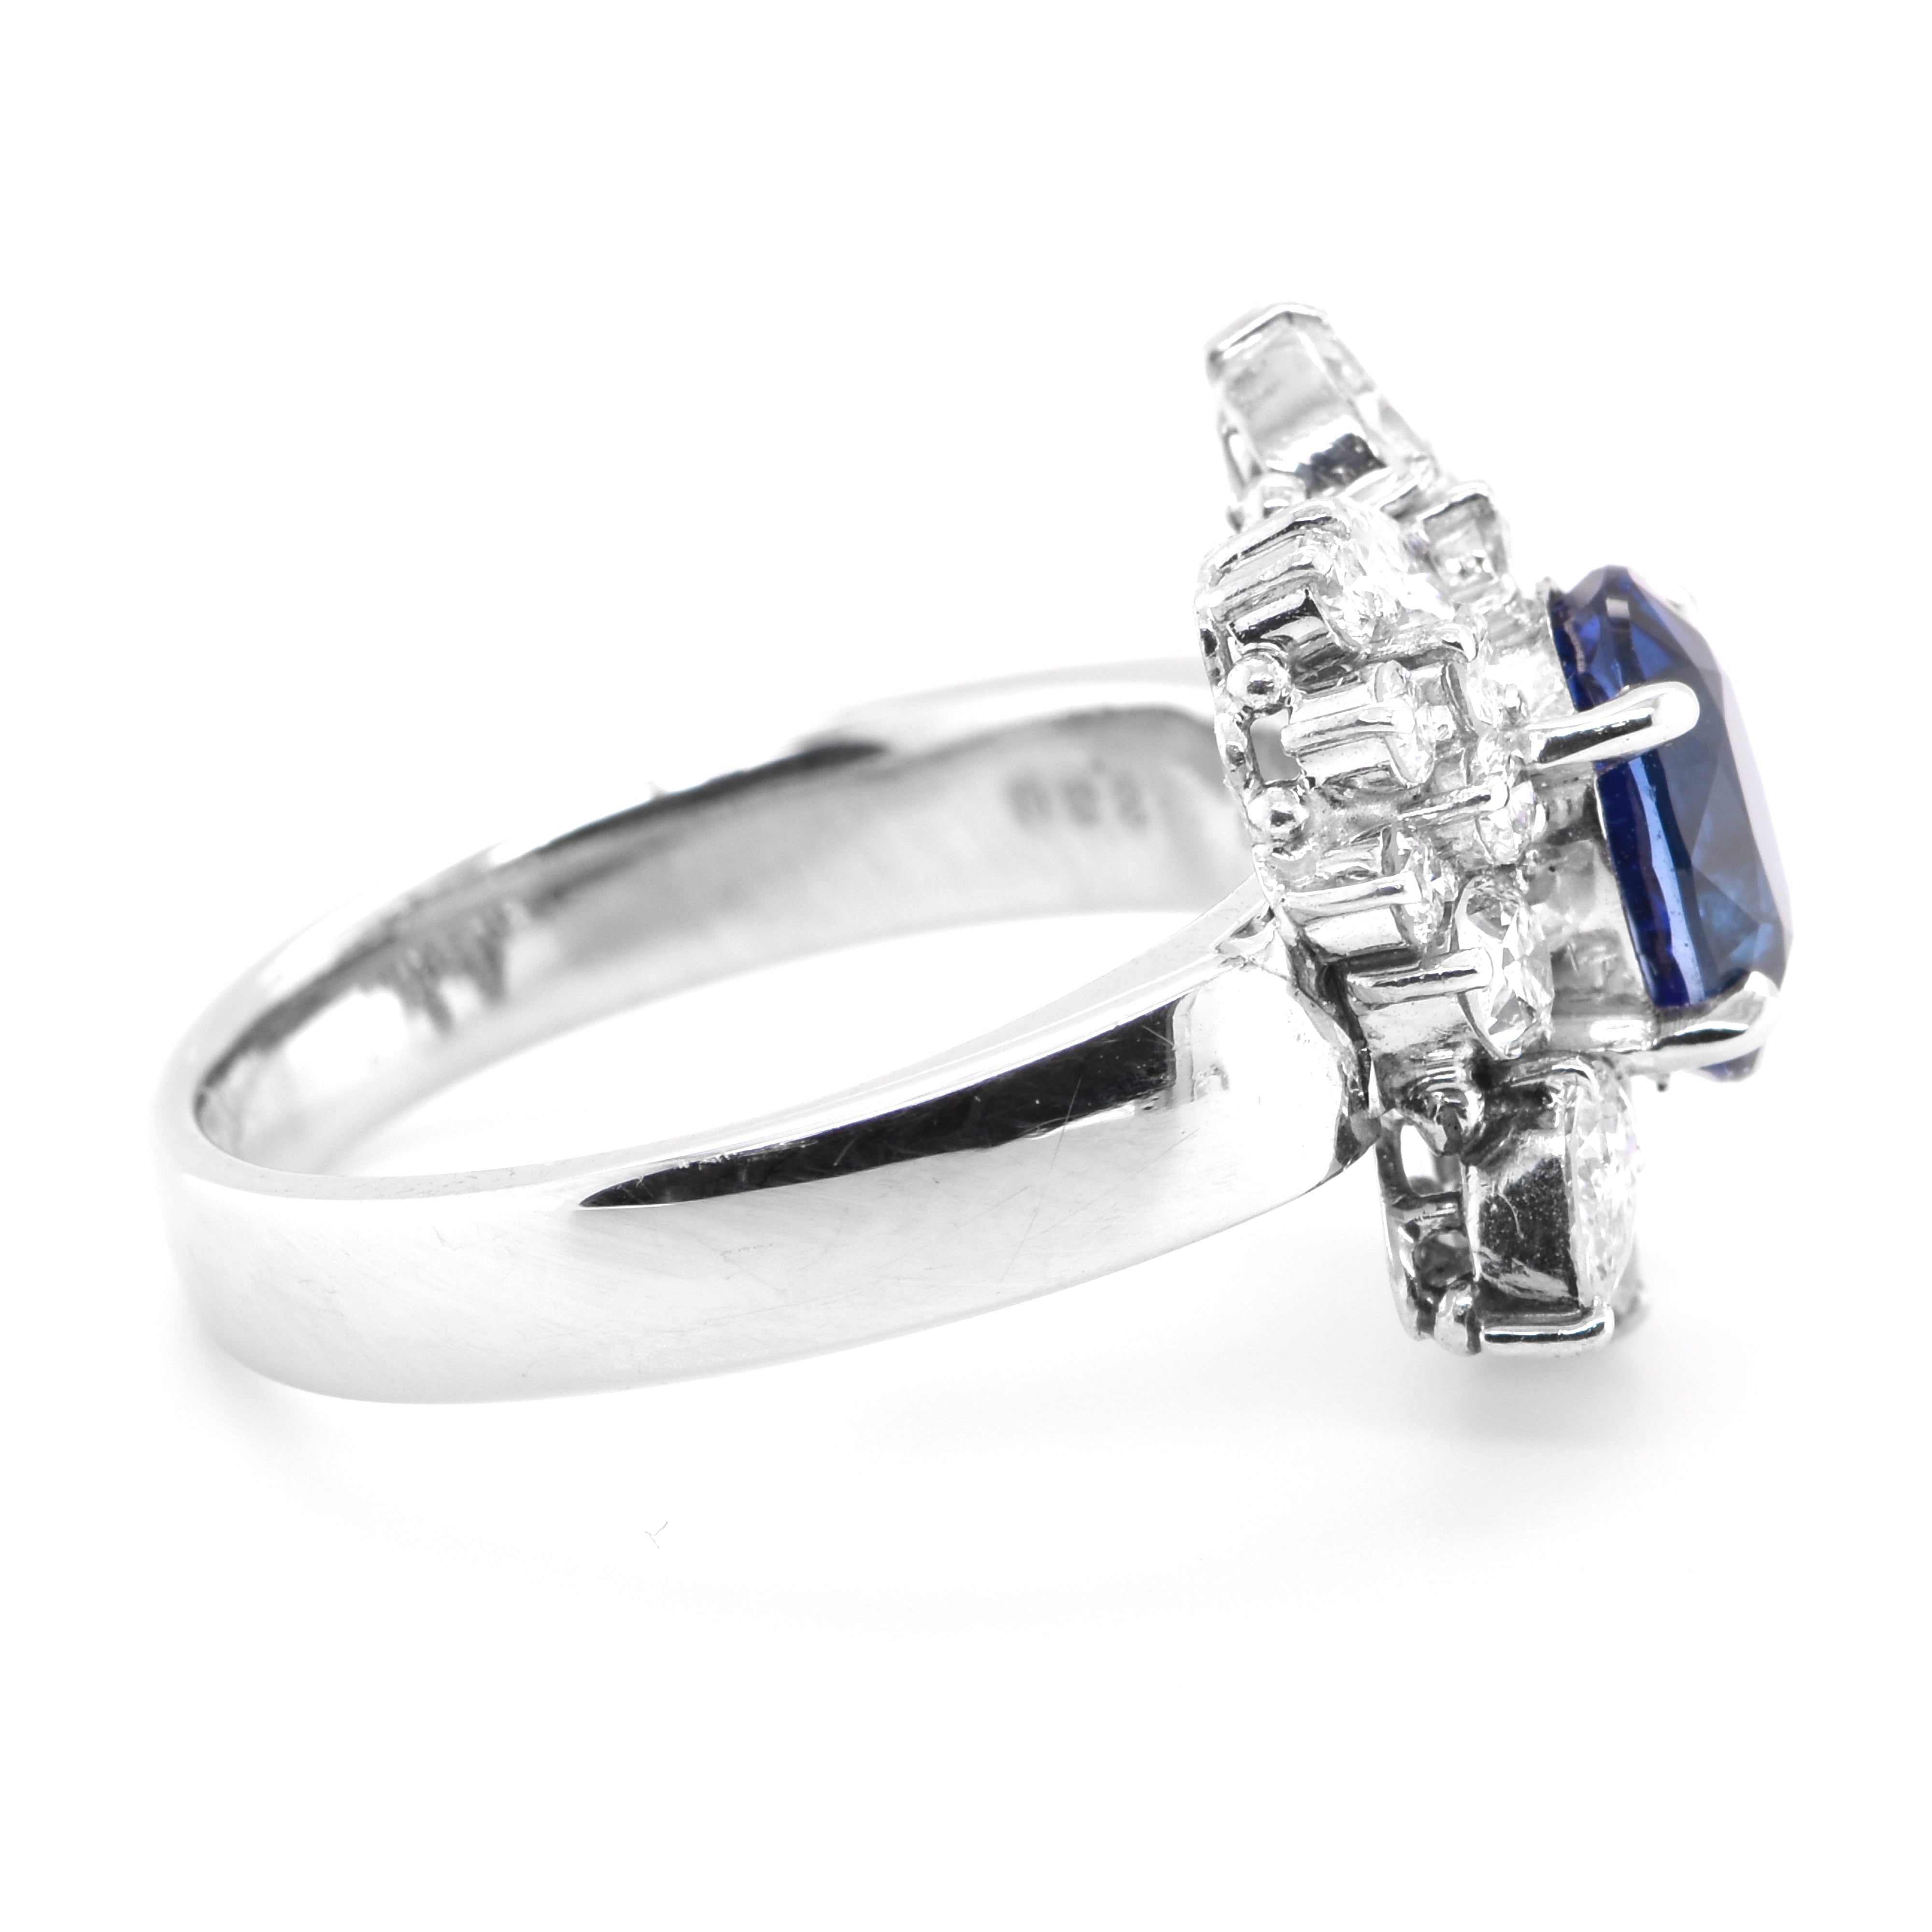 2.30 Carat Natural Madagascar Sapphire and Diamond Ring set in Platinum